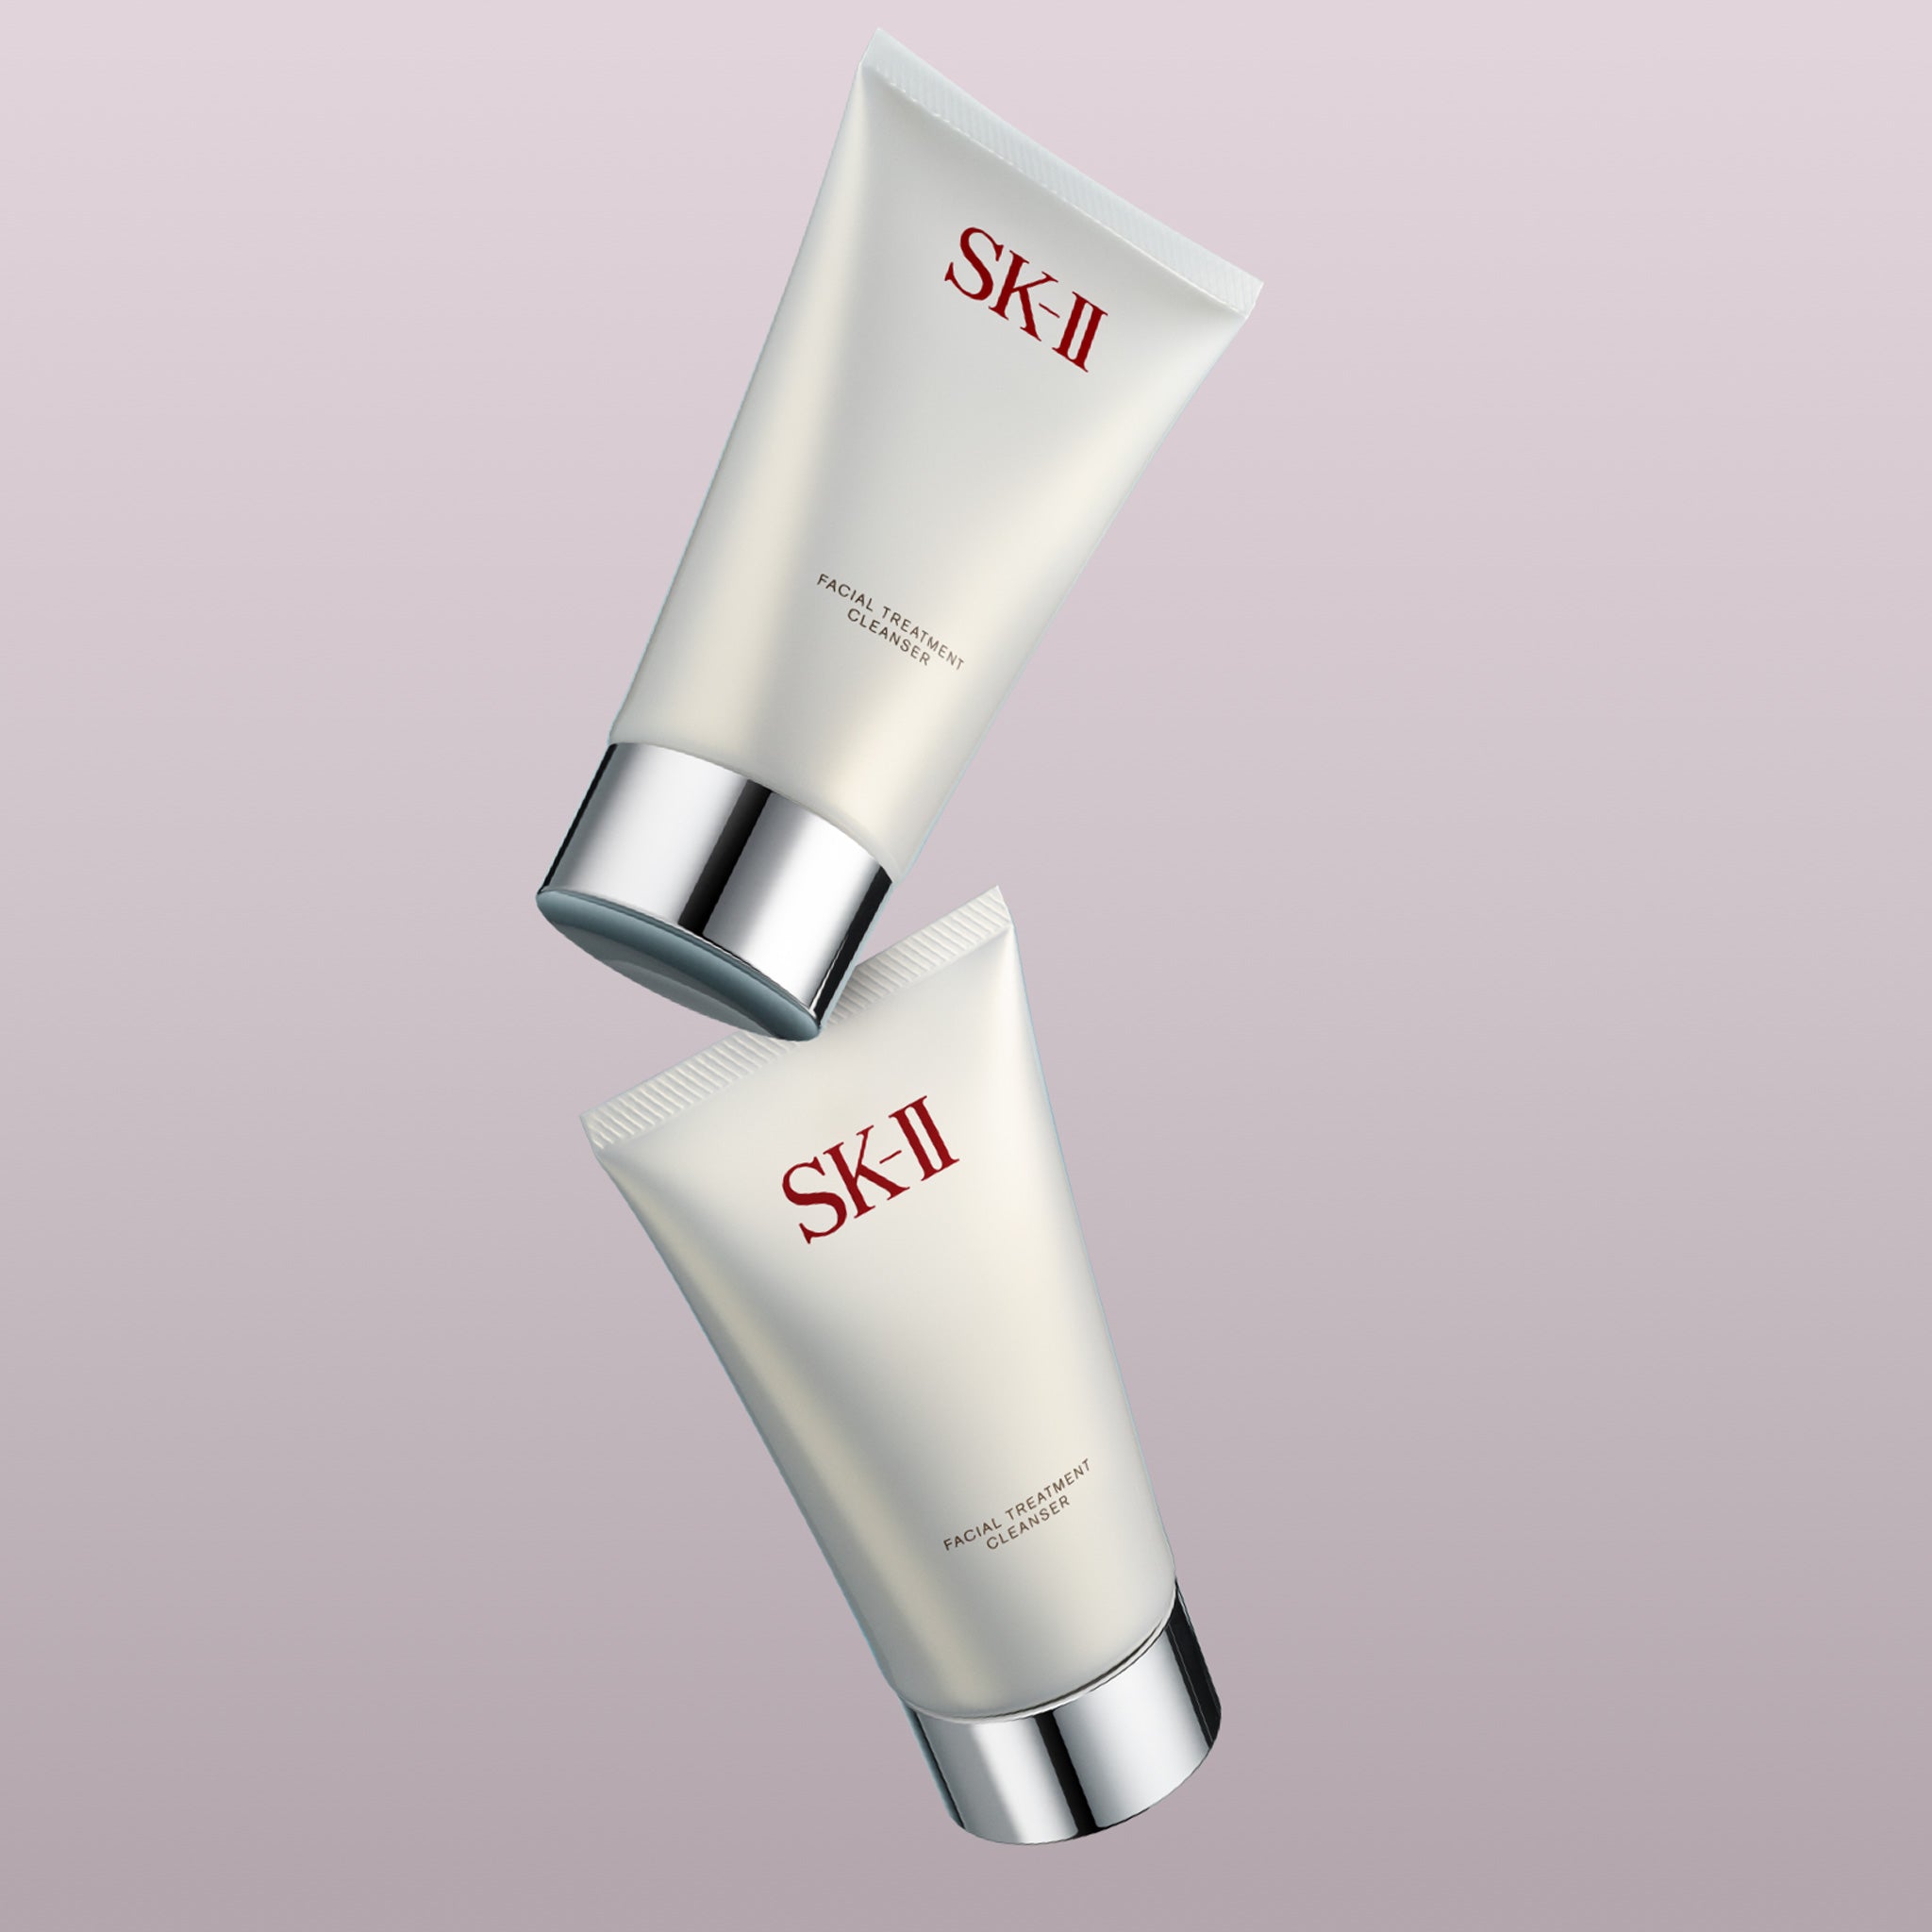 SK-II Facial Treatment Gentle Cleanser 120g